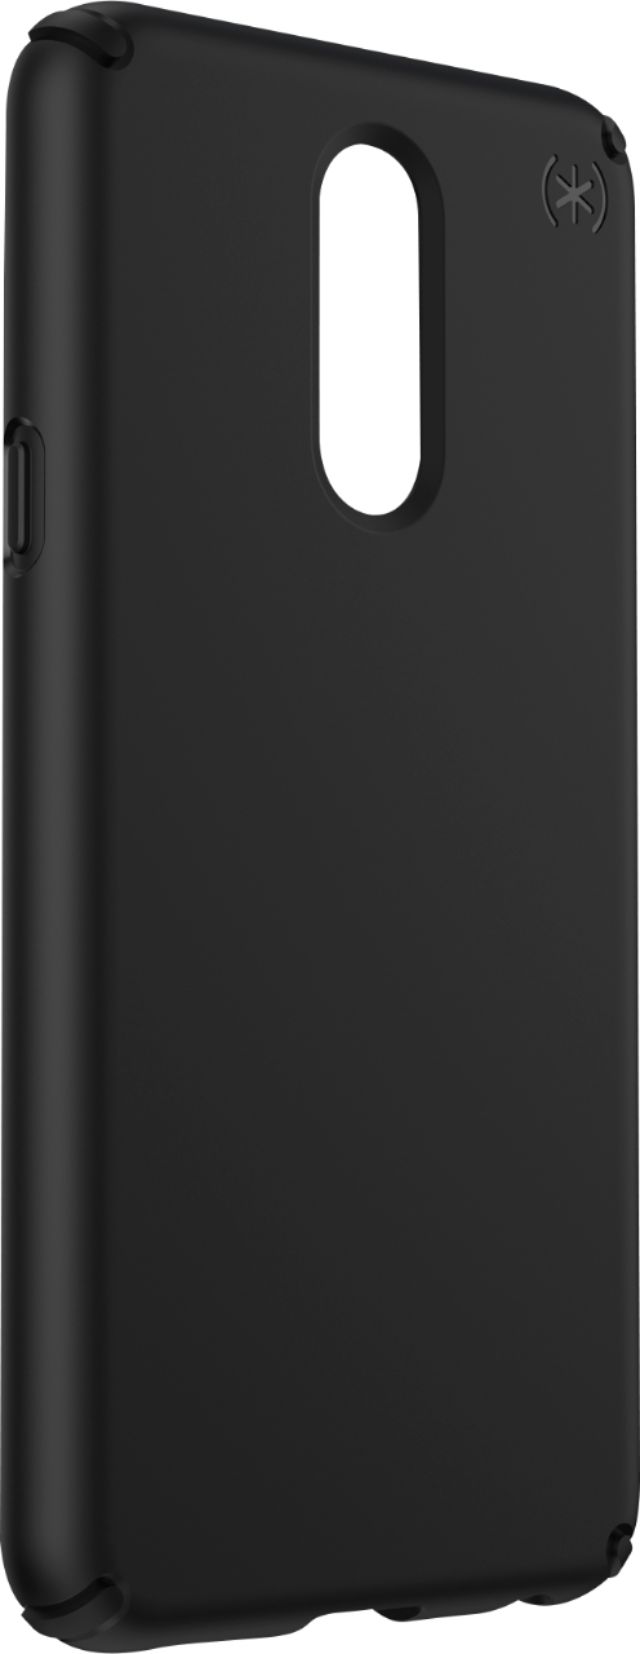 Angle View: Verizon Prepaid - Samsung Galaxy A02 with 32GB Memory Prepaid Cell Phone - Black